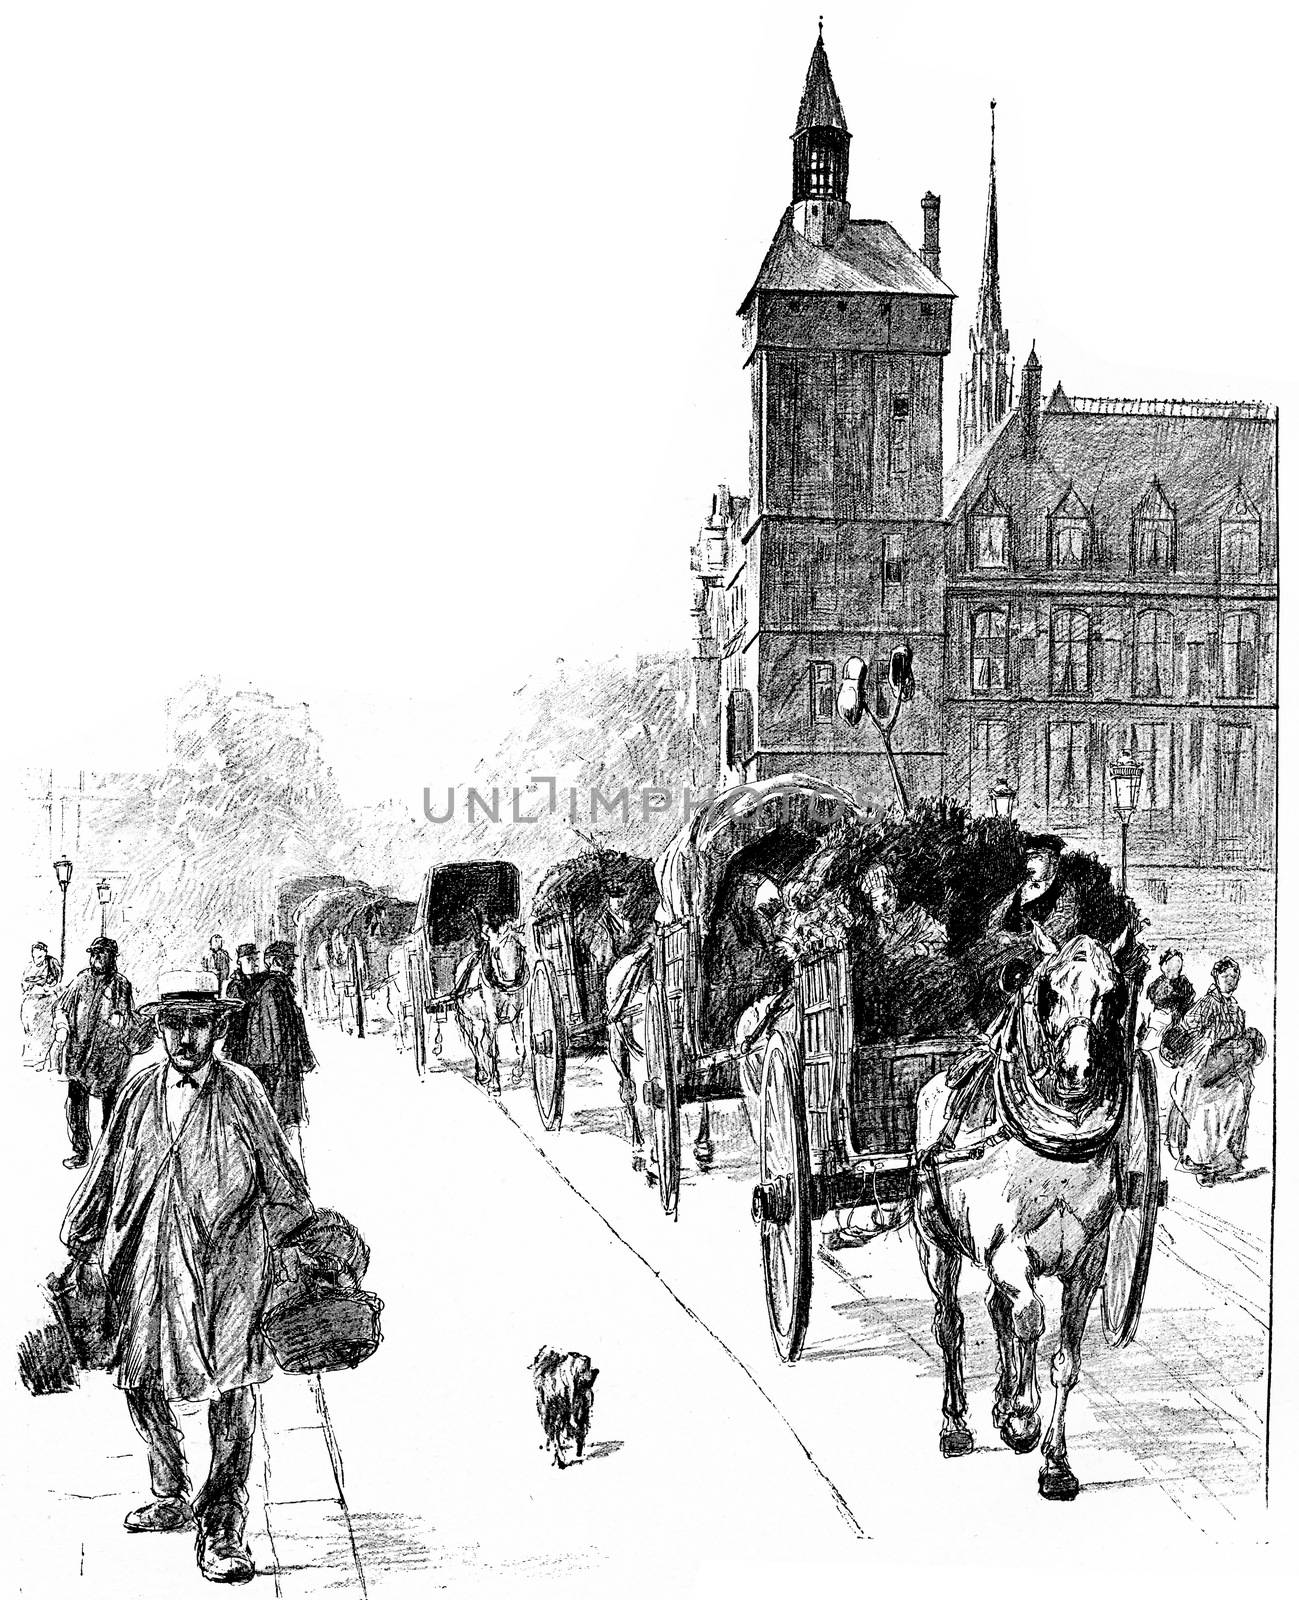 Arrivals from the suburbs, vintage engraved illustration. Paris - Auguste VITU – 1890.